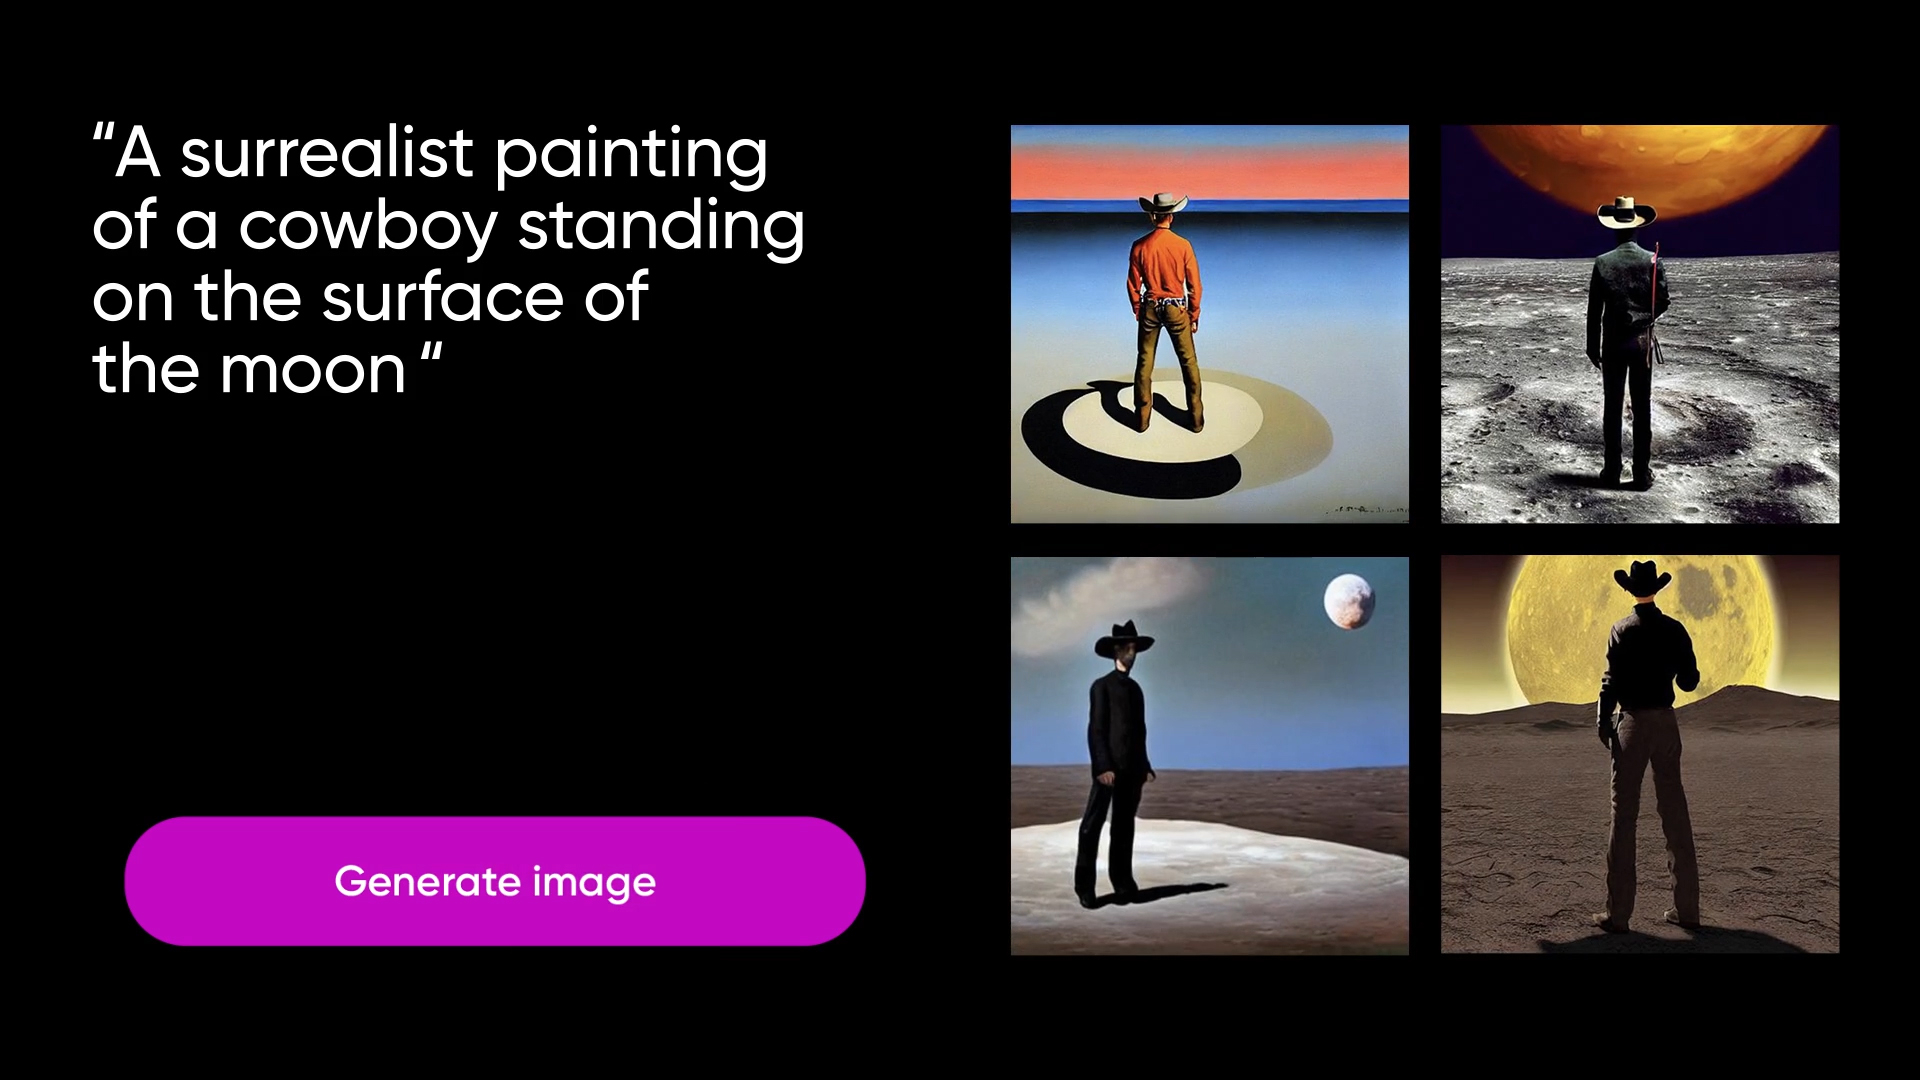 Picsart Unveils Innovative AI GIF Generator for Original Animated Content  #Picsart 